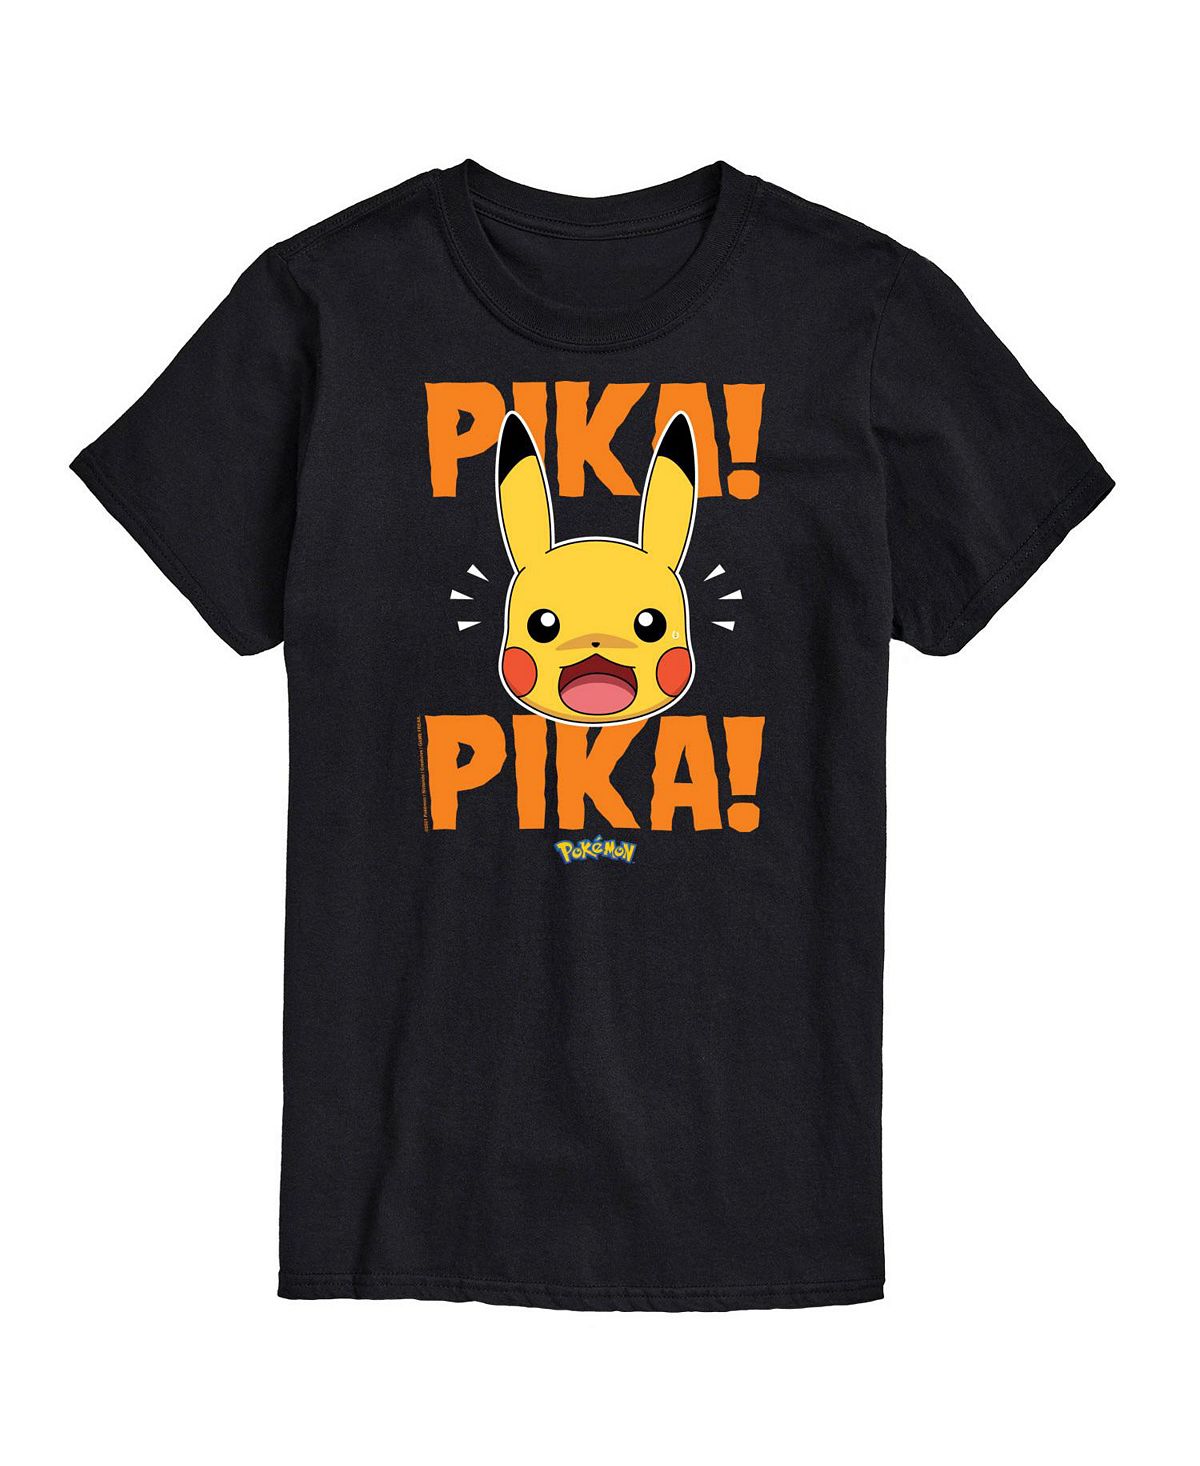 Мужская футболка с короткими рукавами pokemon pika pika AIRWAVES, черный набор pokemon футболка pika punk чёрная l бейсболка angry pika